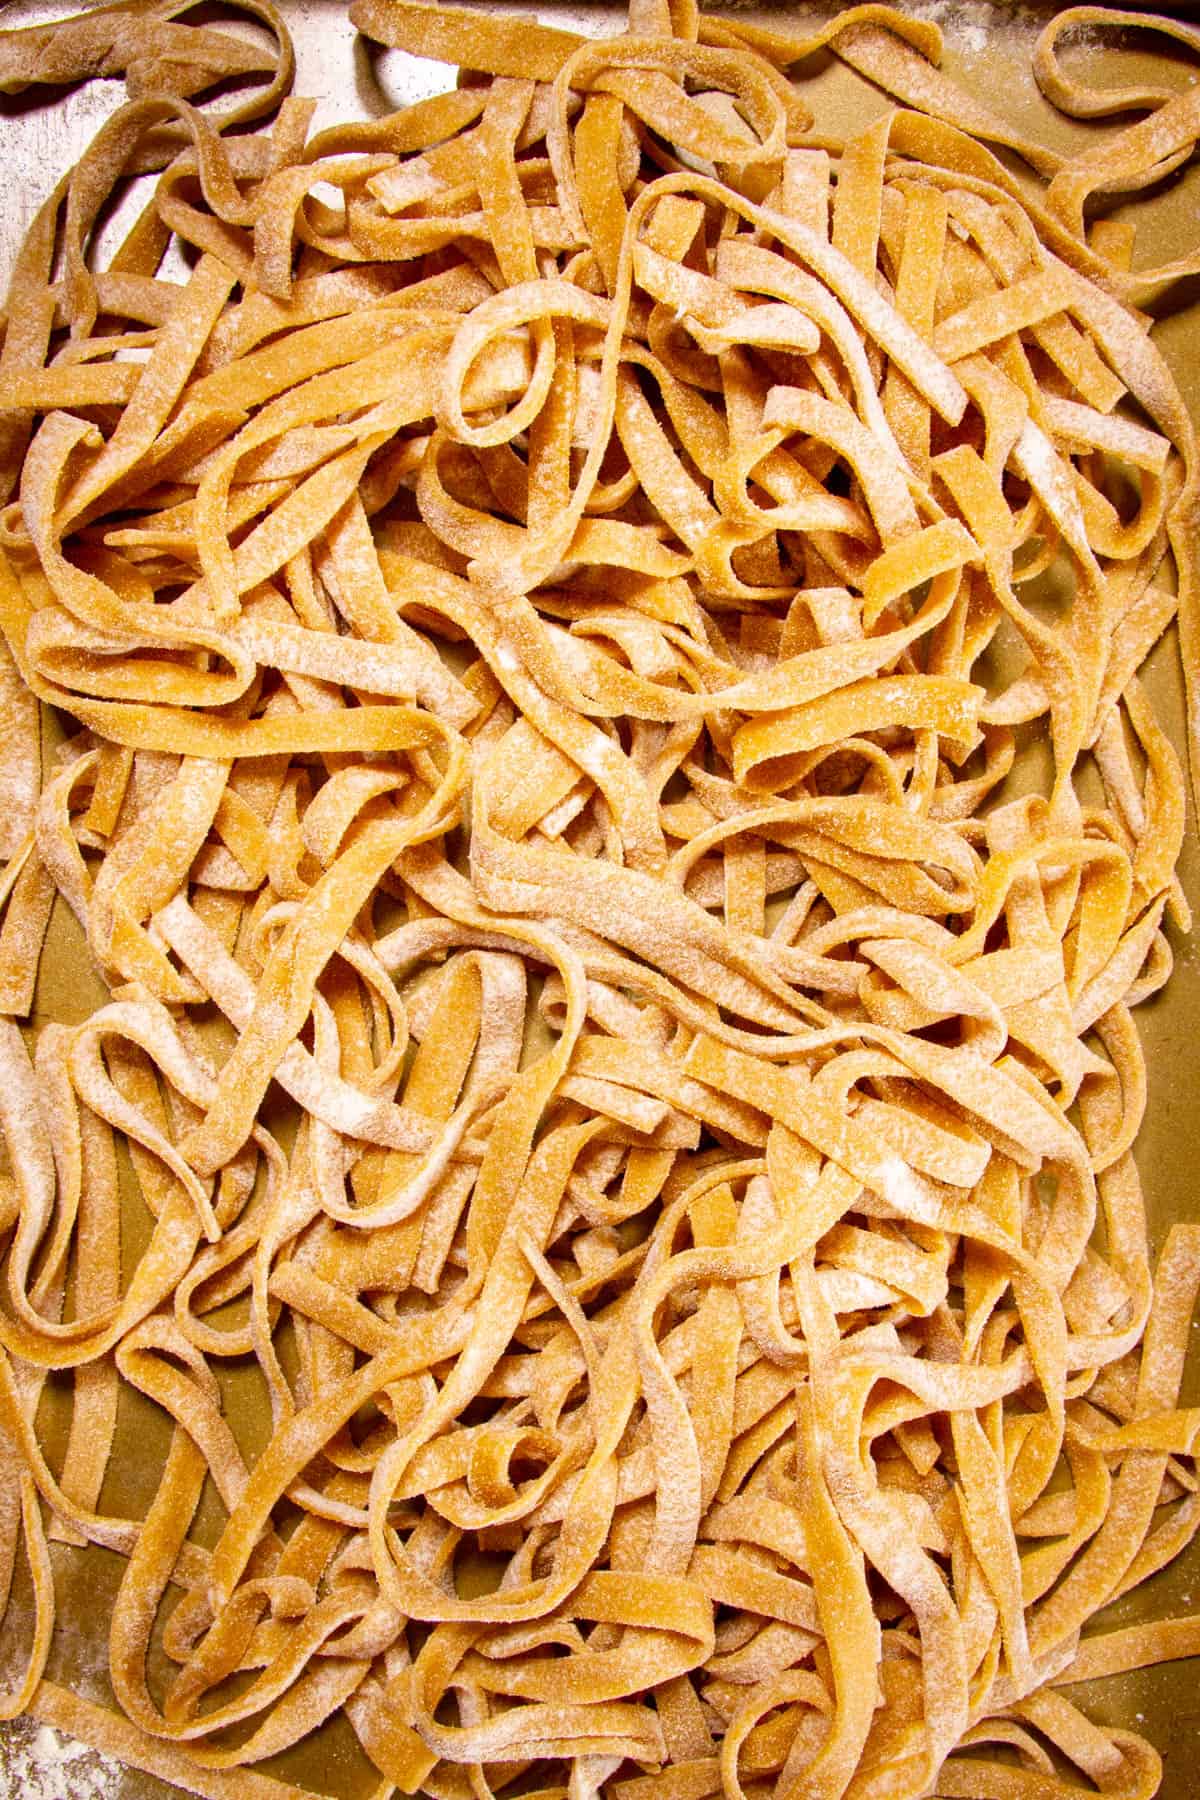 An up close shot of the pasta.